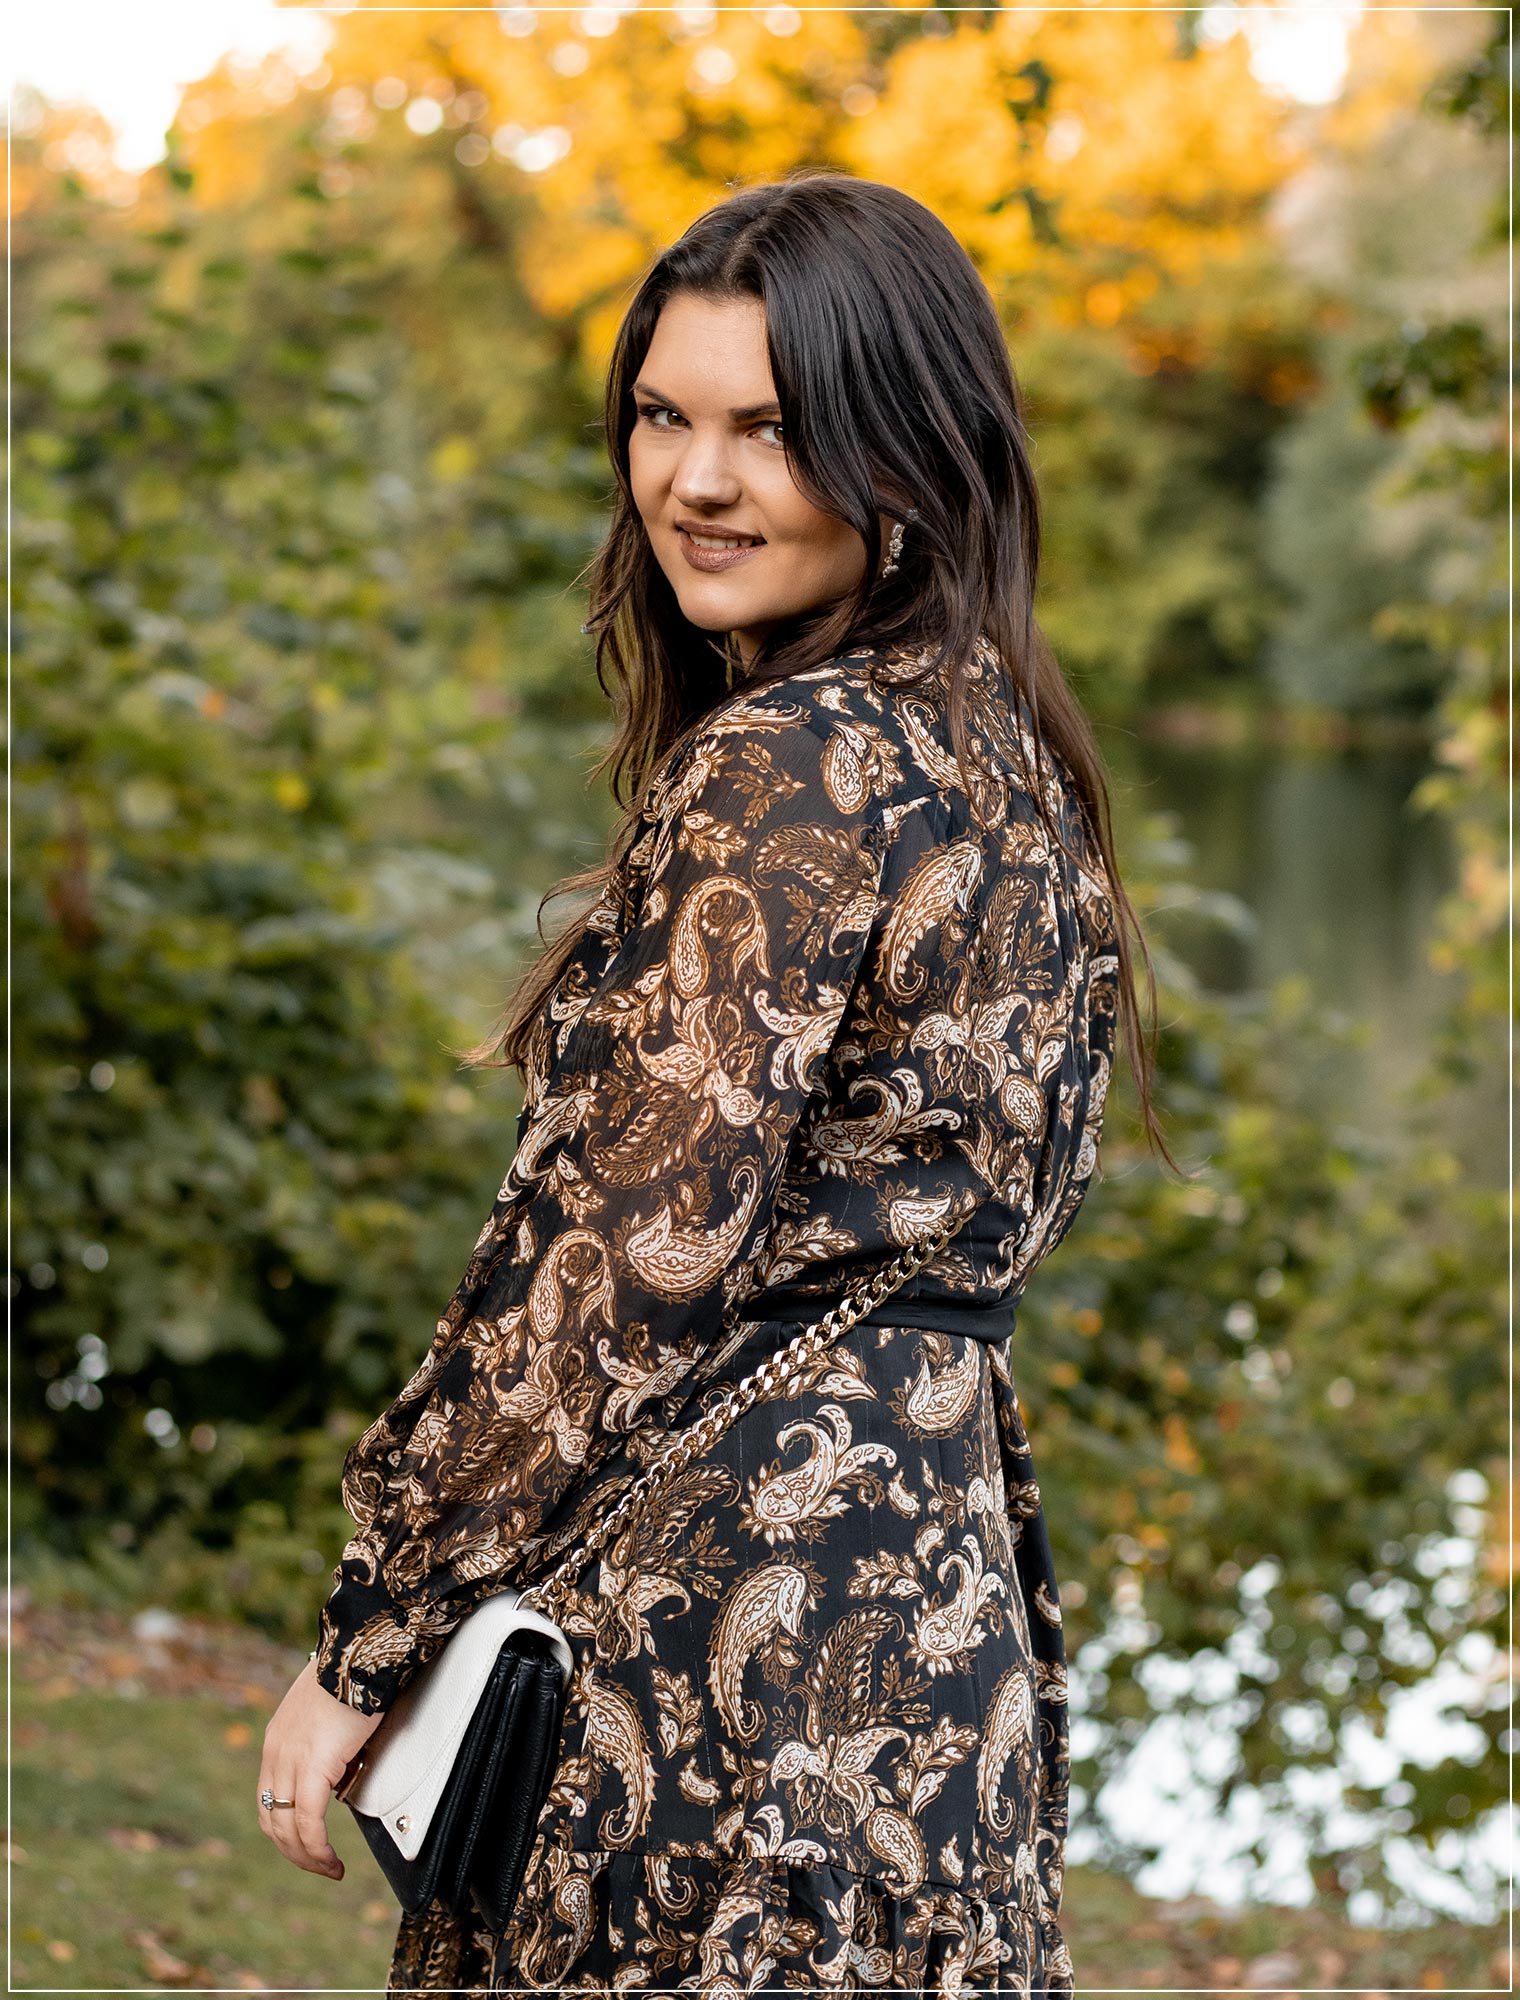 Paisley-Kleid im Herbst stylen